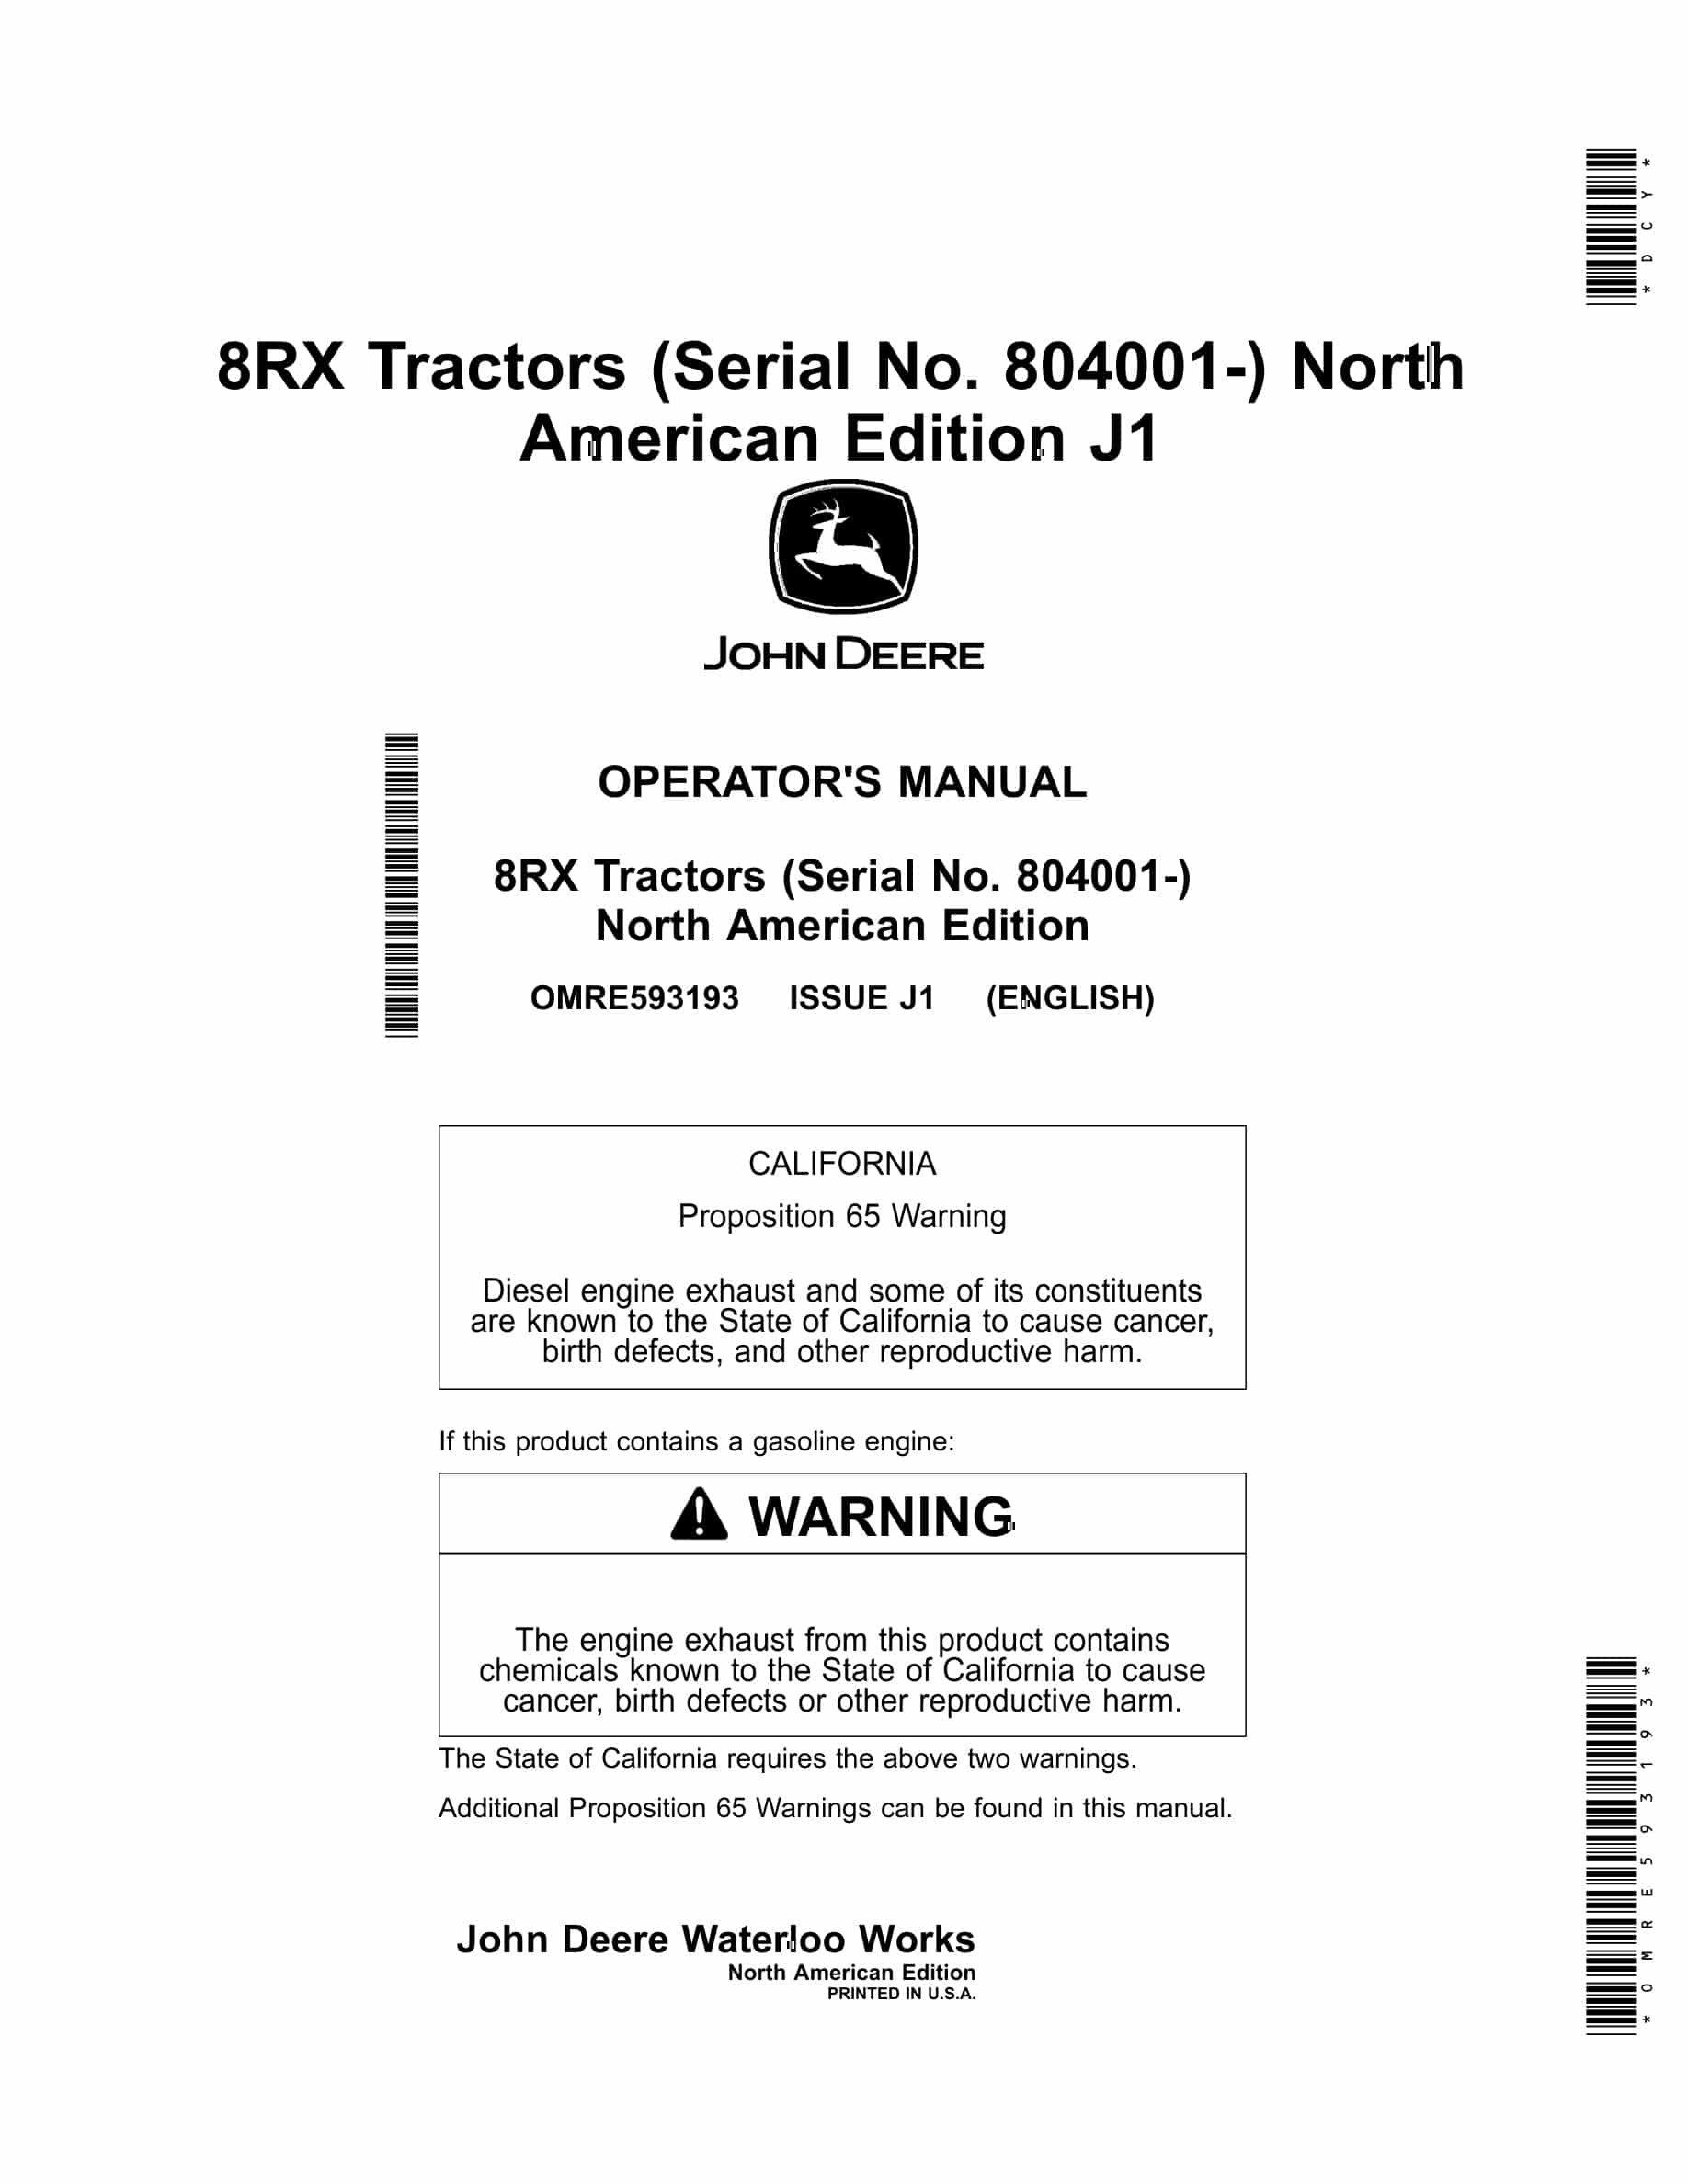 John Deere 8RX Tractor Operator Manual OMRE593193-1